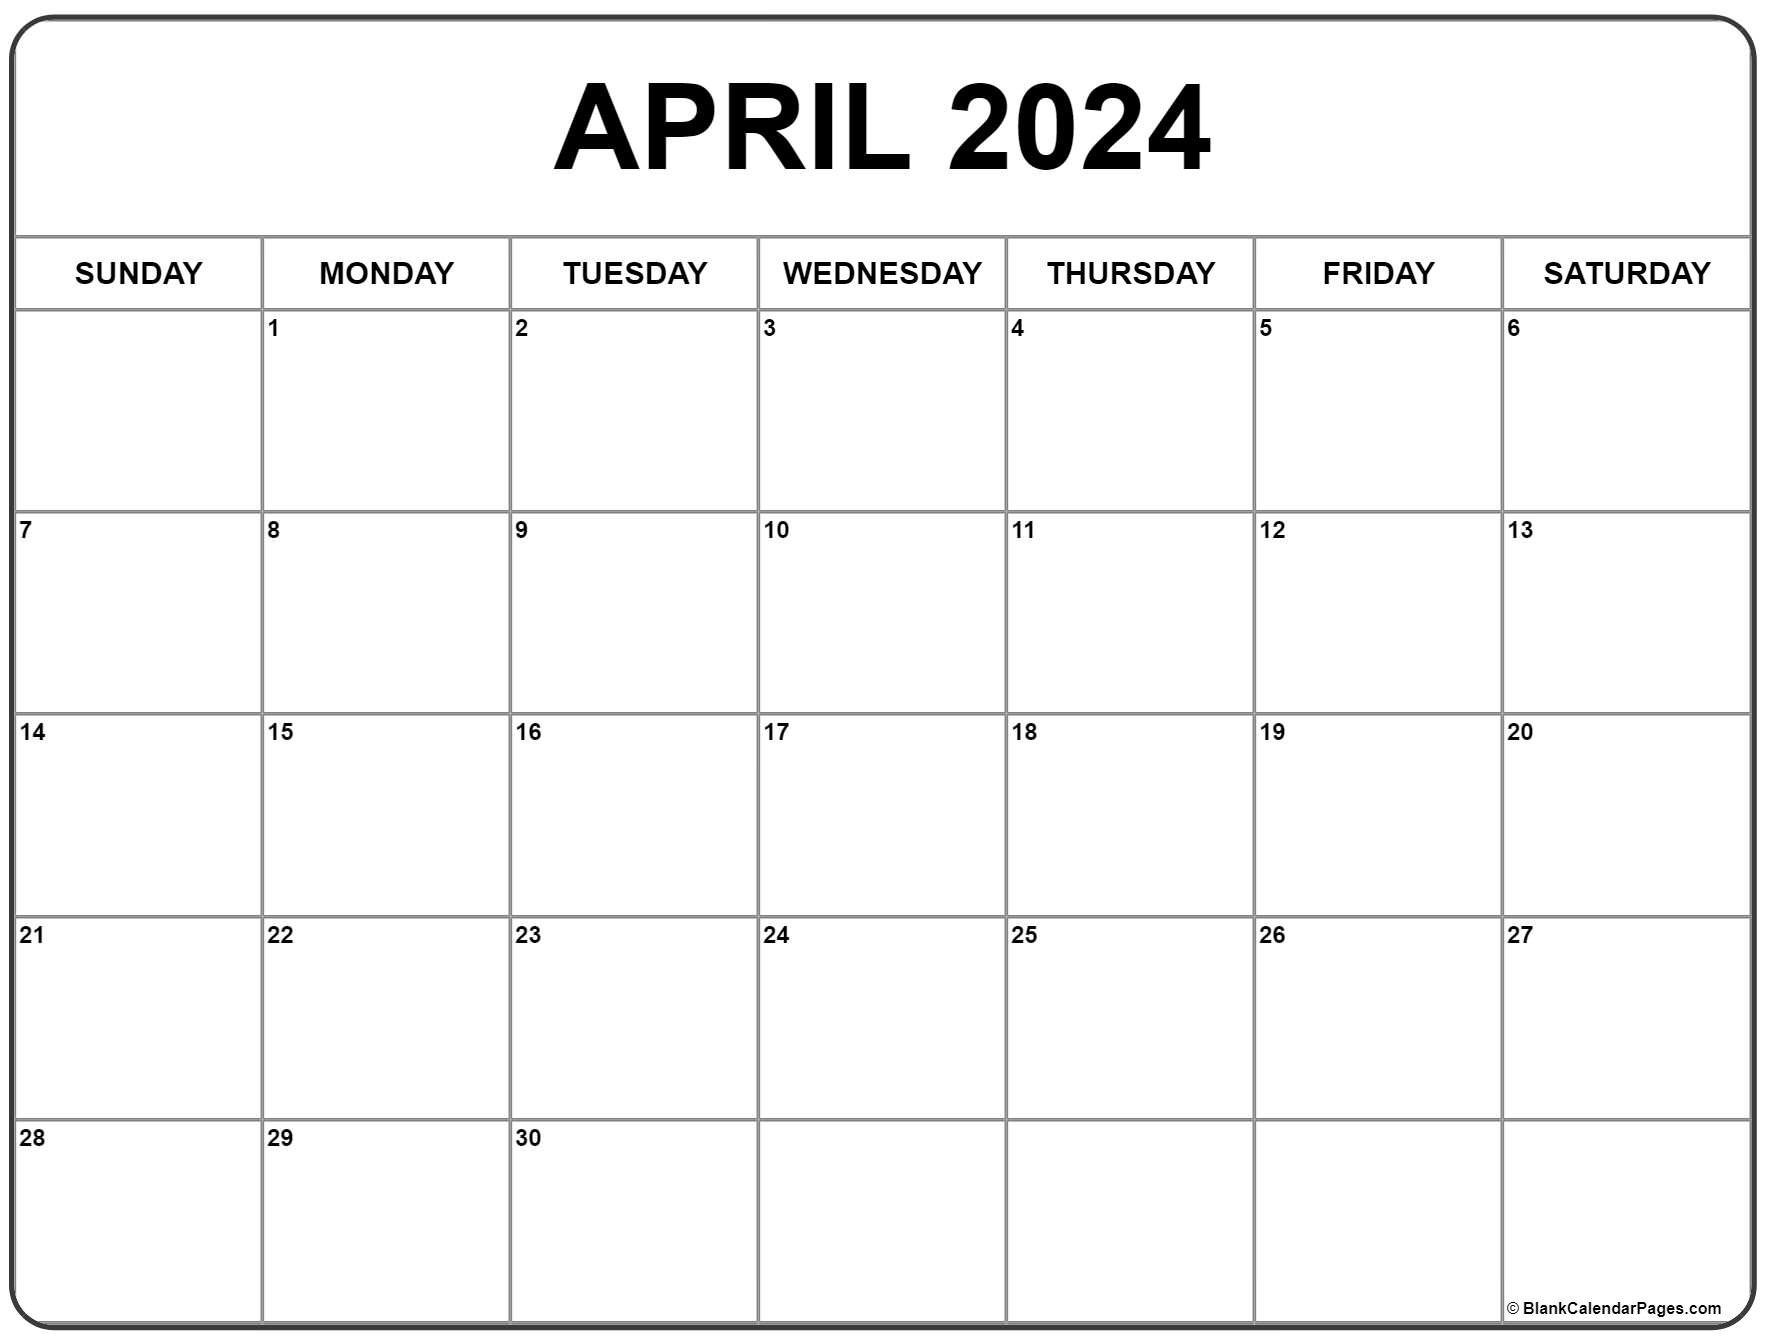 April 2024 Calendar | Free Printable Calendar inside Google Calendar April 2024